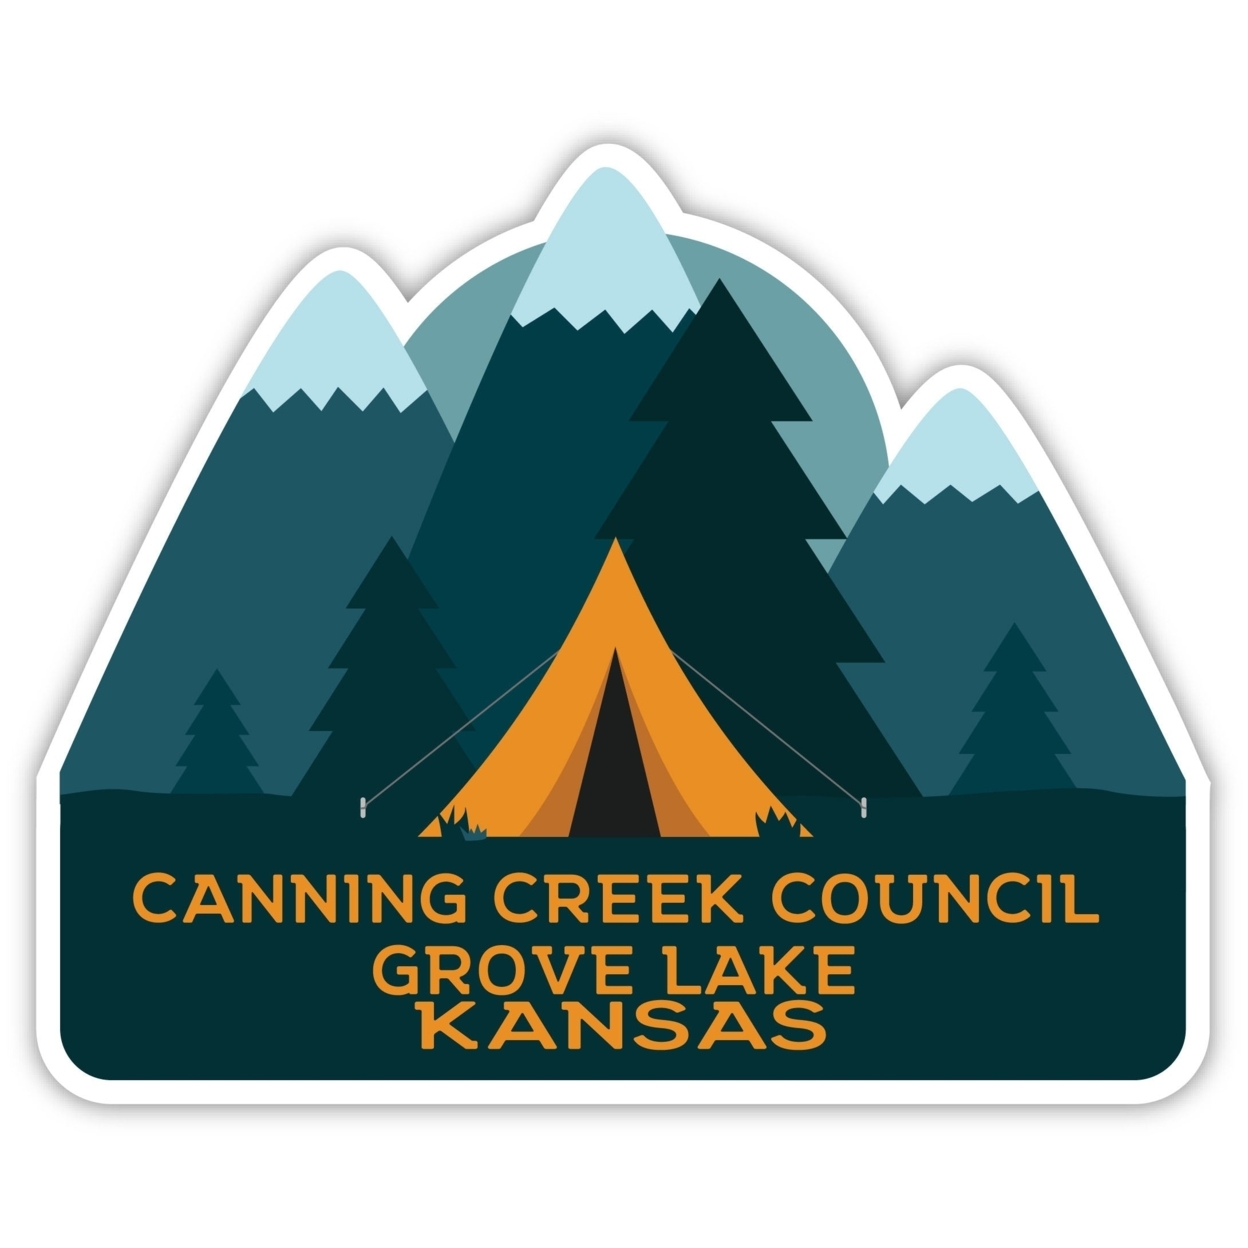 Canning Creek Council Grove Lake Kansas Souvenir Decorative Stickers (Choose Theme And Size) - Single Unit, 2-Inch, Tent